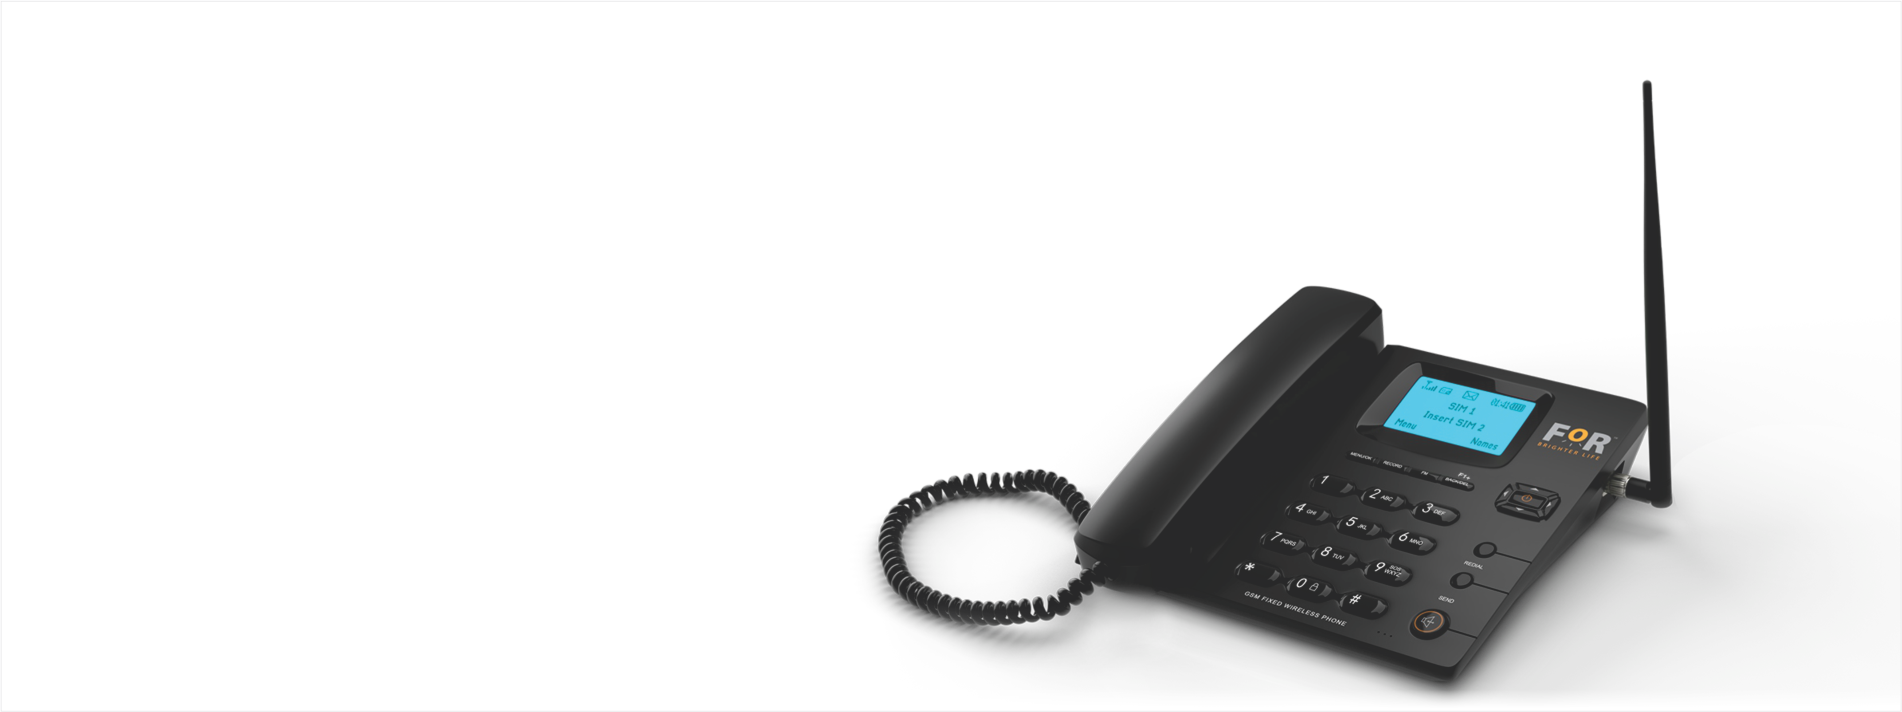 Fortechno | GSM DUAL SIM DESKTOP WIRELESS PHONE manufacturers